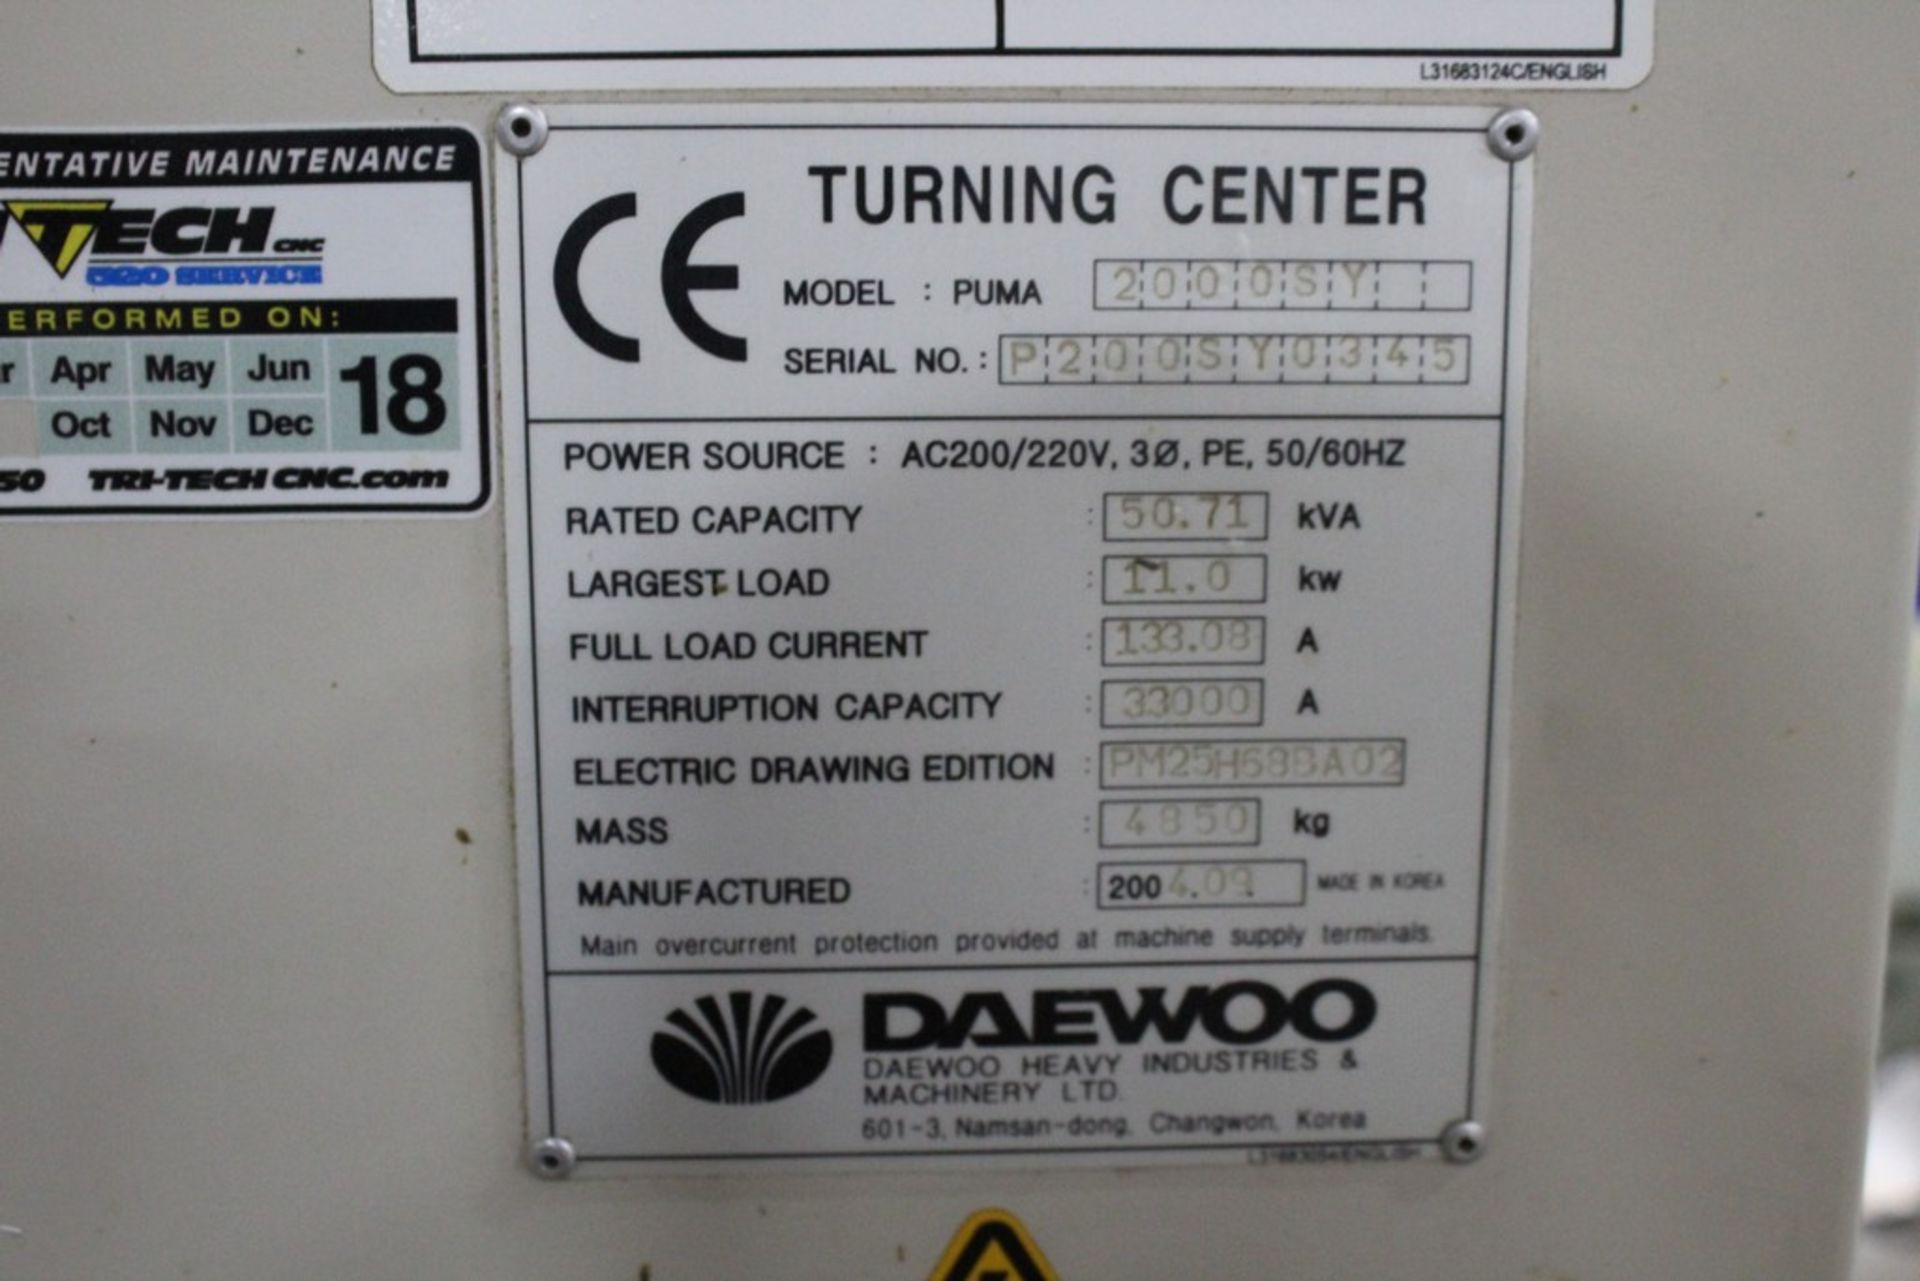 DAEWOO MODEL PUMA 2000SY CNC TURNING CENTER, S/N P200SY034 (NEW 2004), 13” MAX. TURN DIAMETER, 20” - Image 11 of 11